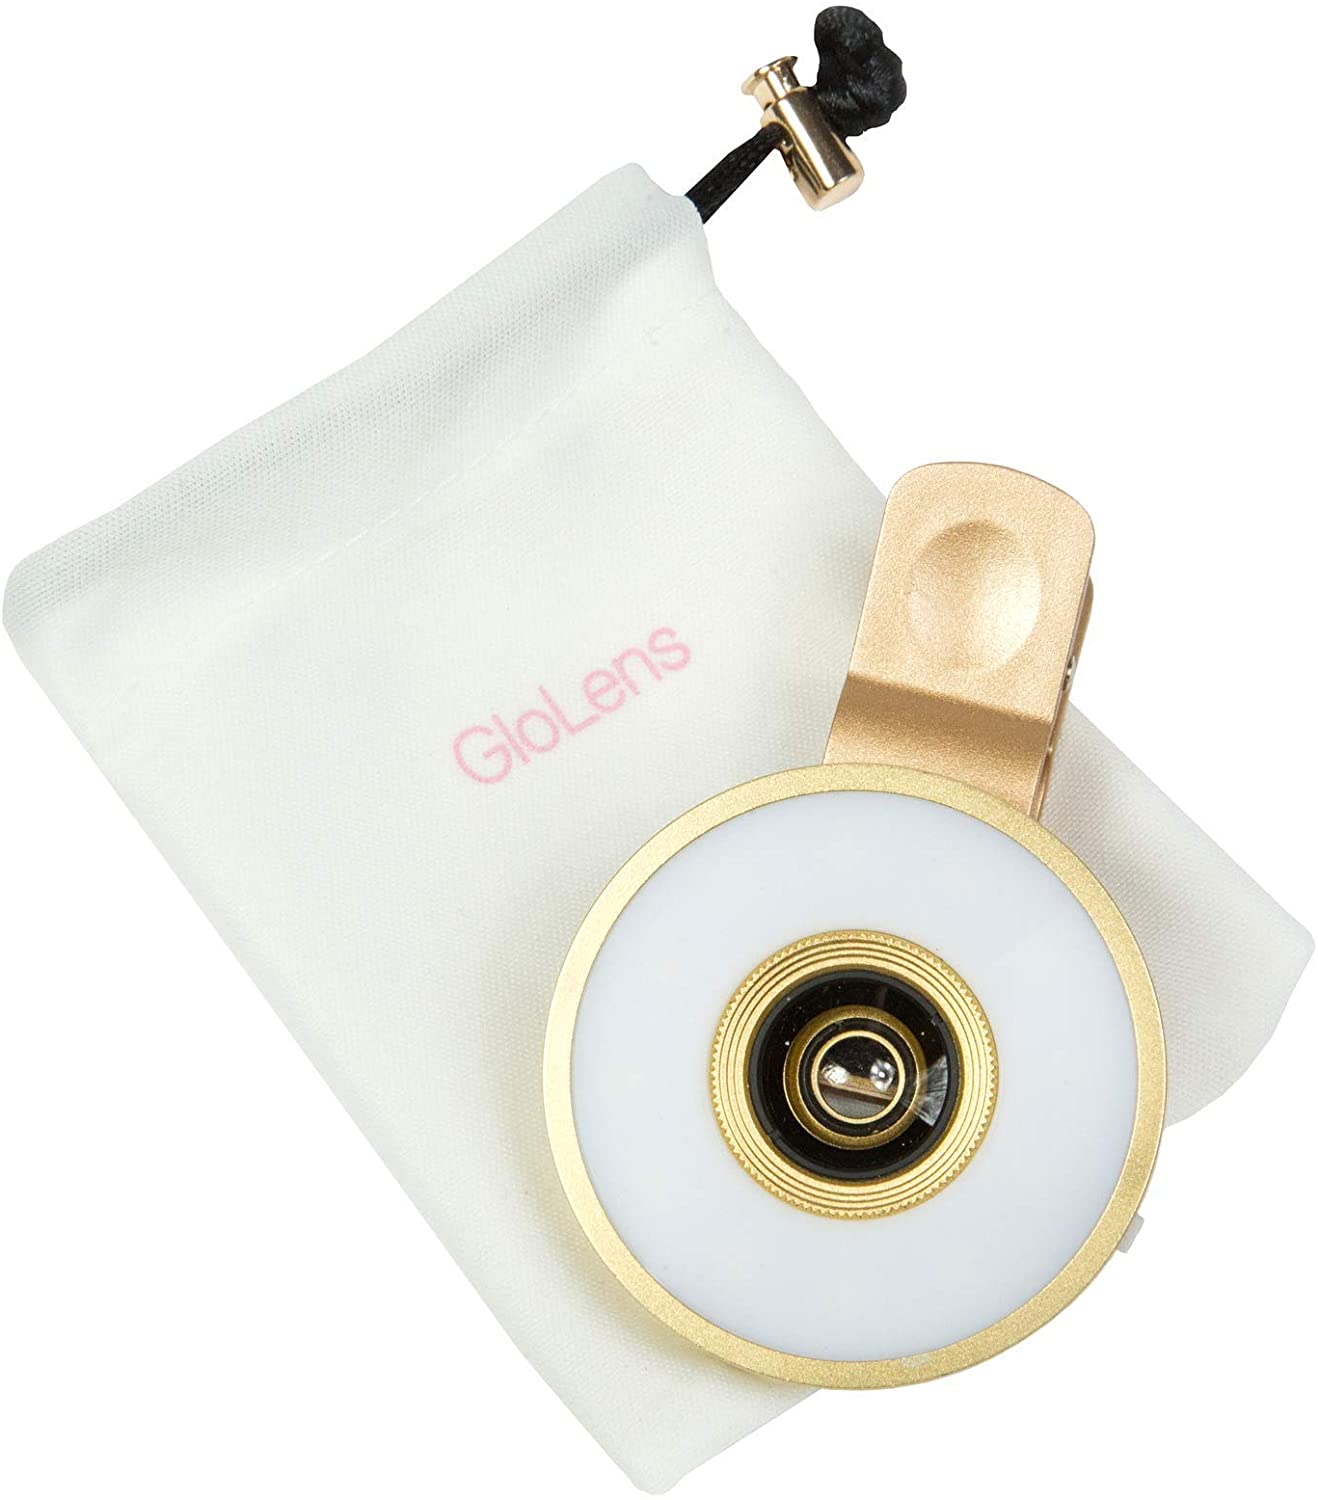 Glolens Illuminating Cellphone Light- Gold